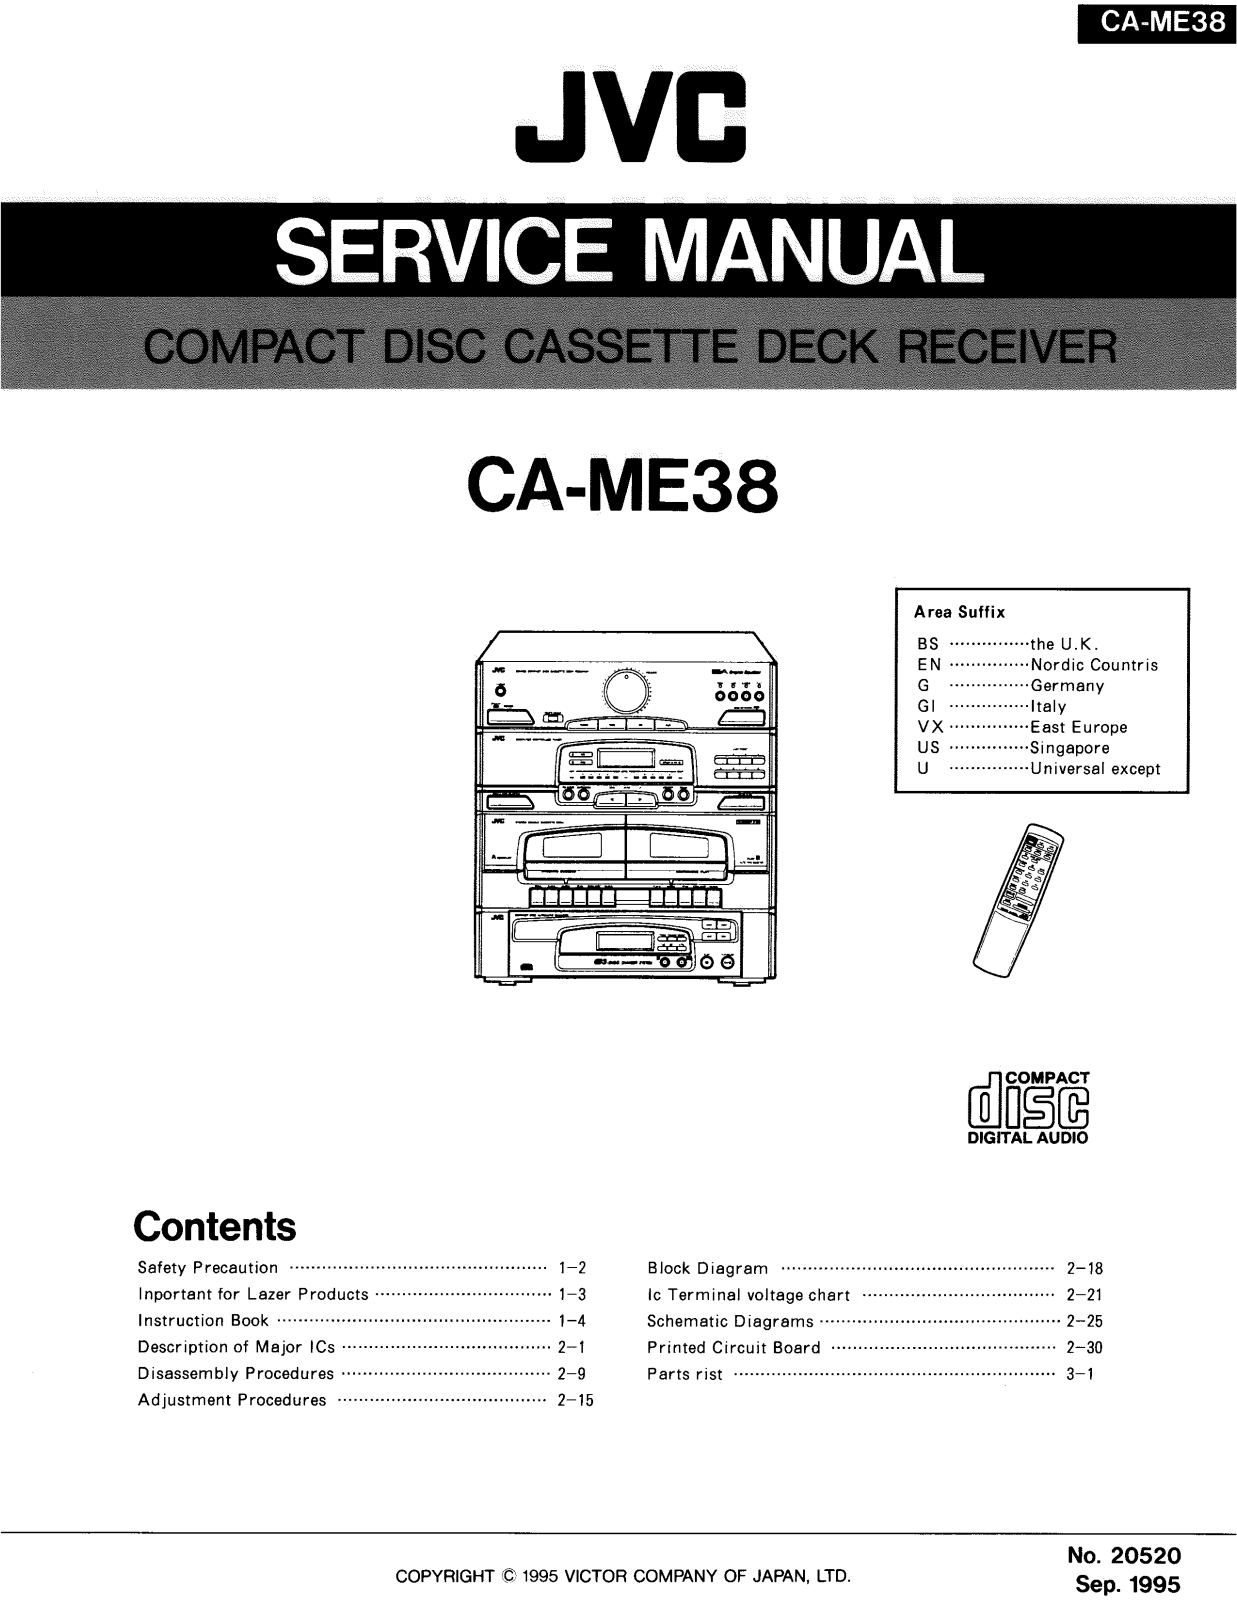 JVC CAME-38 Service manual